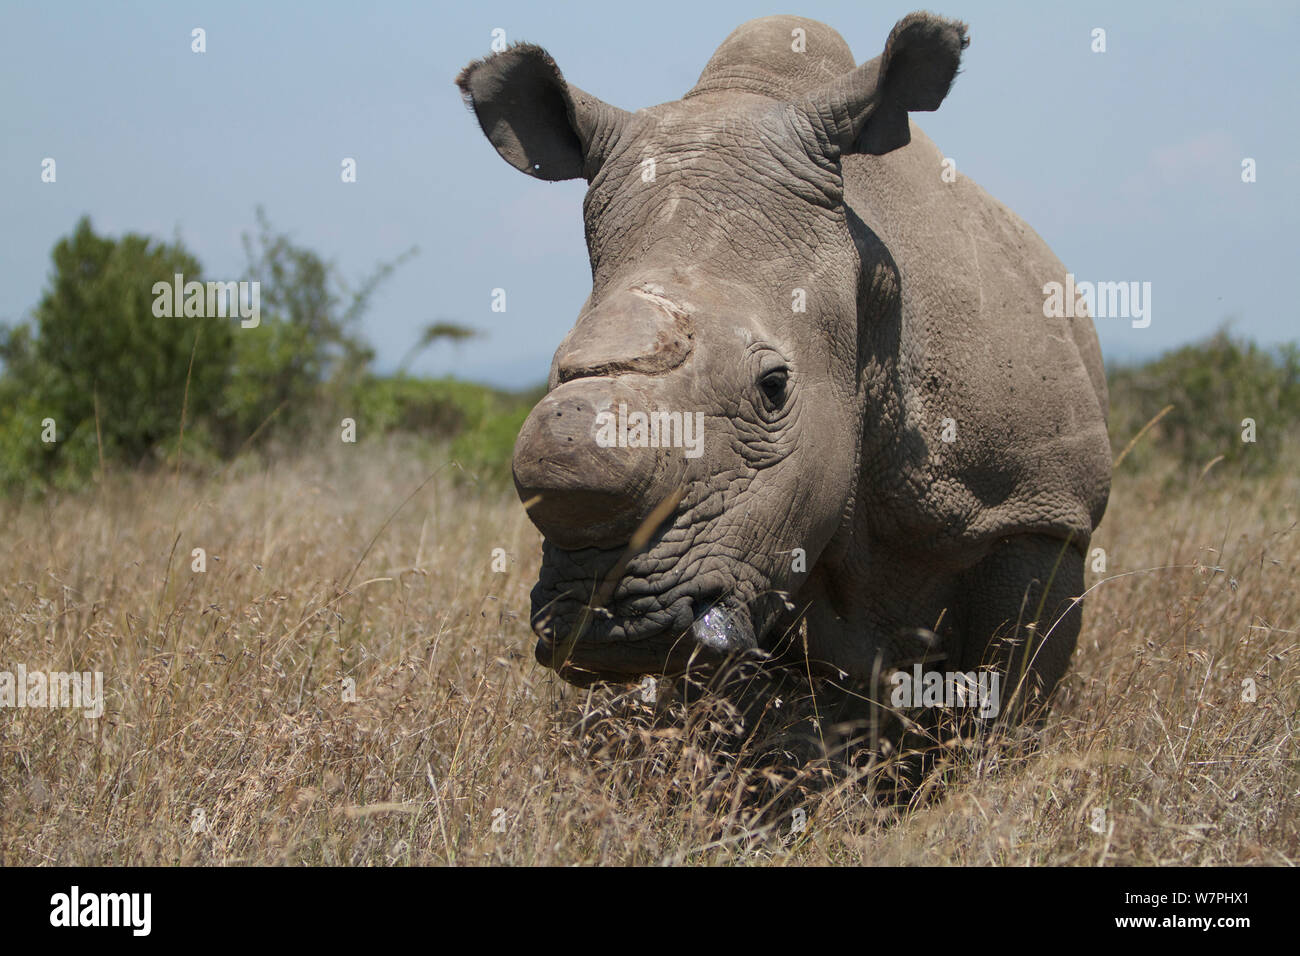 Northern white rhinoceros / square-lipped rhinoceros (Ceratotherium simum cottoni) dehorned, in grass, Ol Pejeta Conservancy, Kenya, Africa. Stock Photo